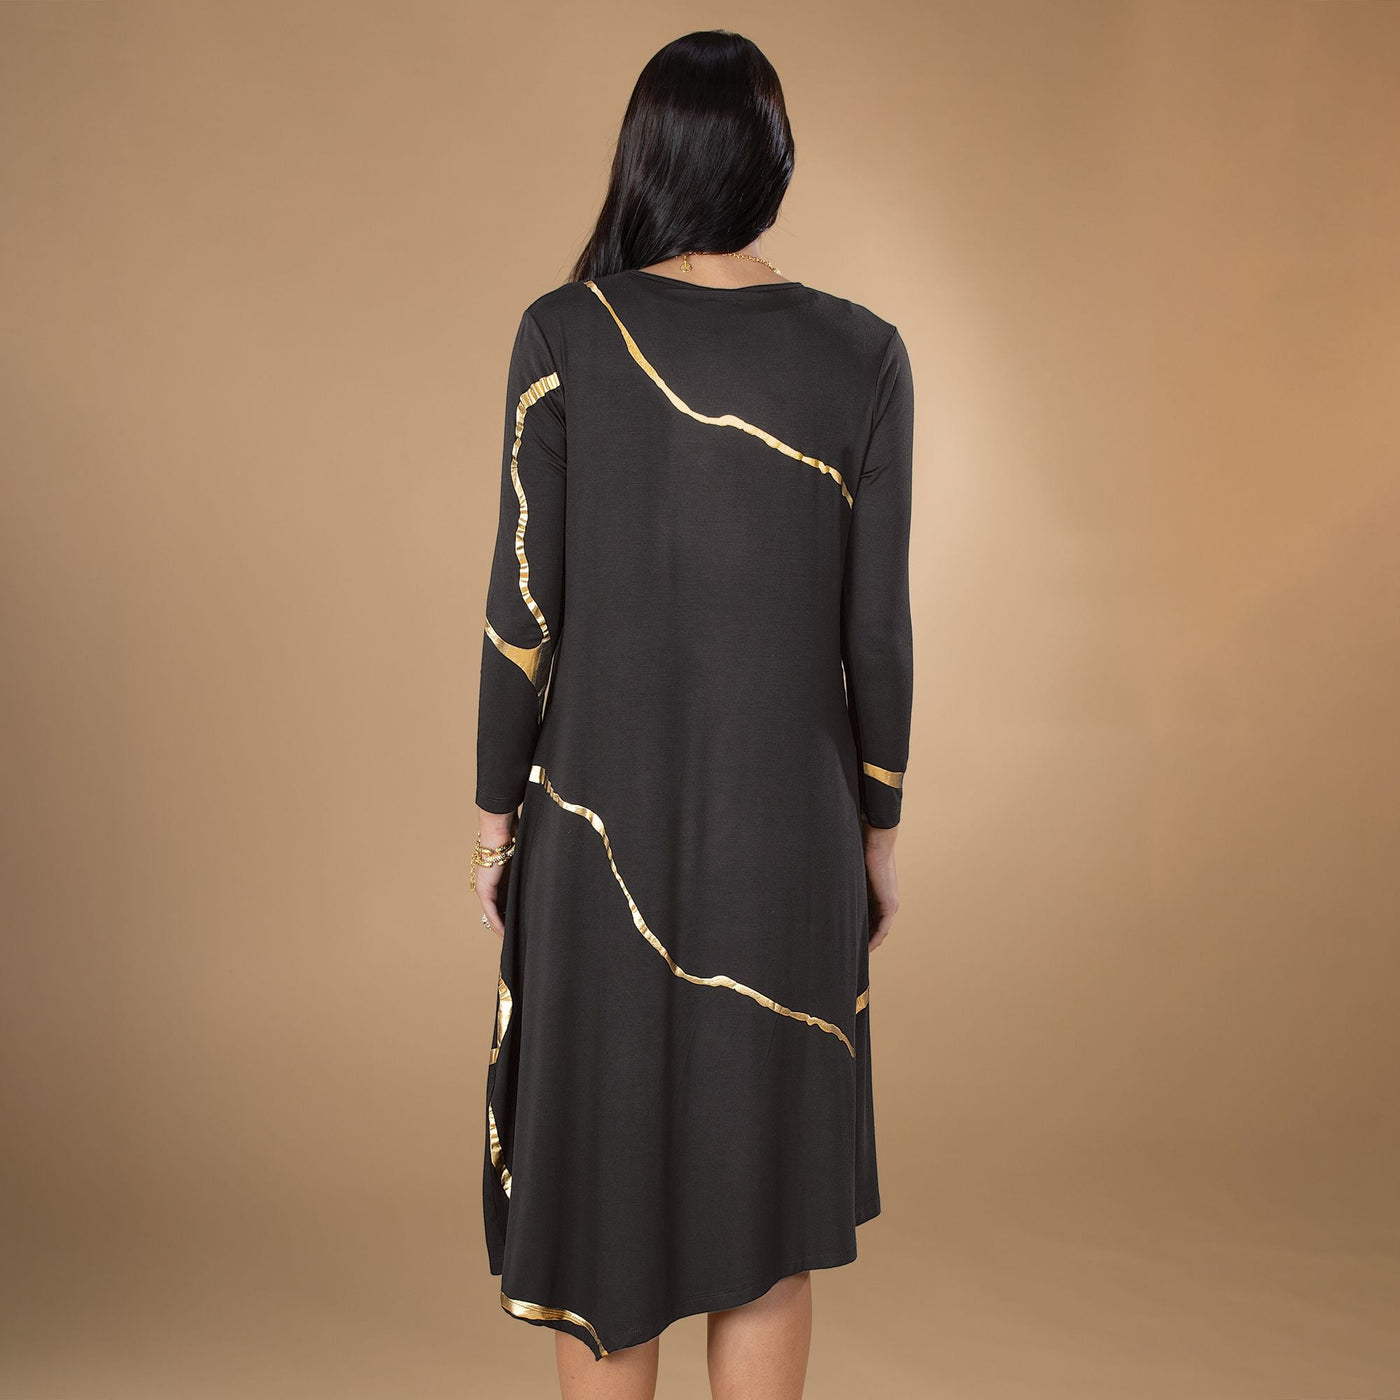 Kintsugi-Inspired Charcoal Dress